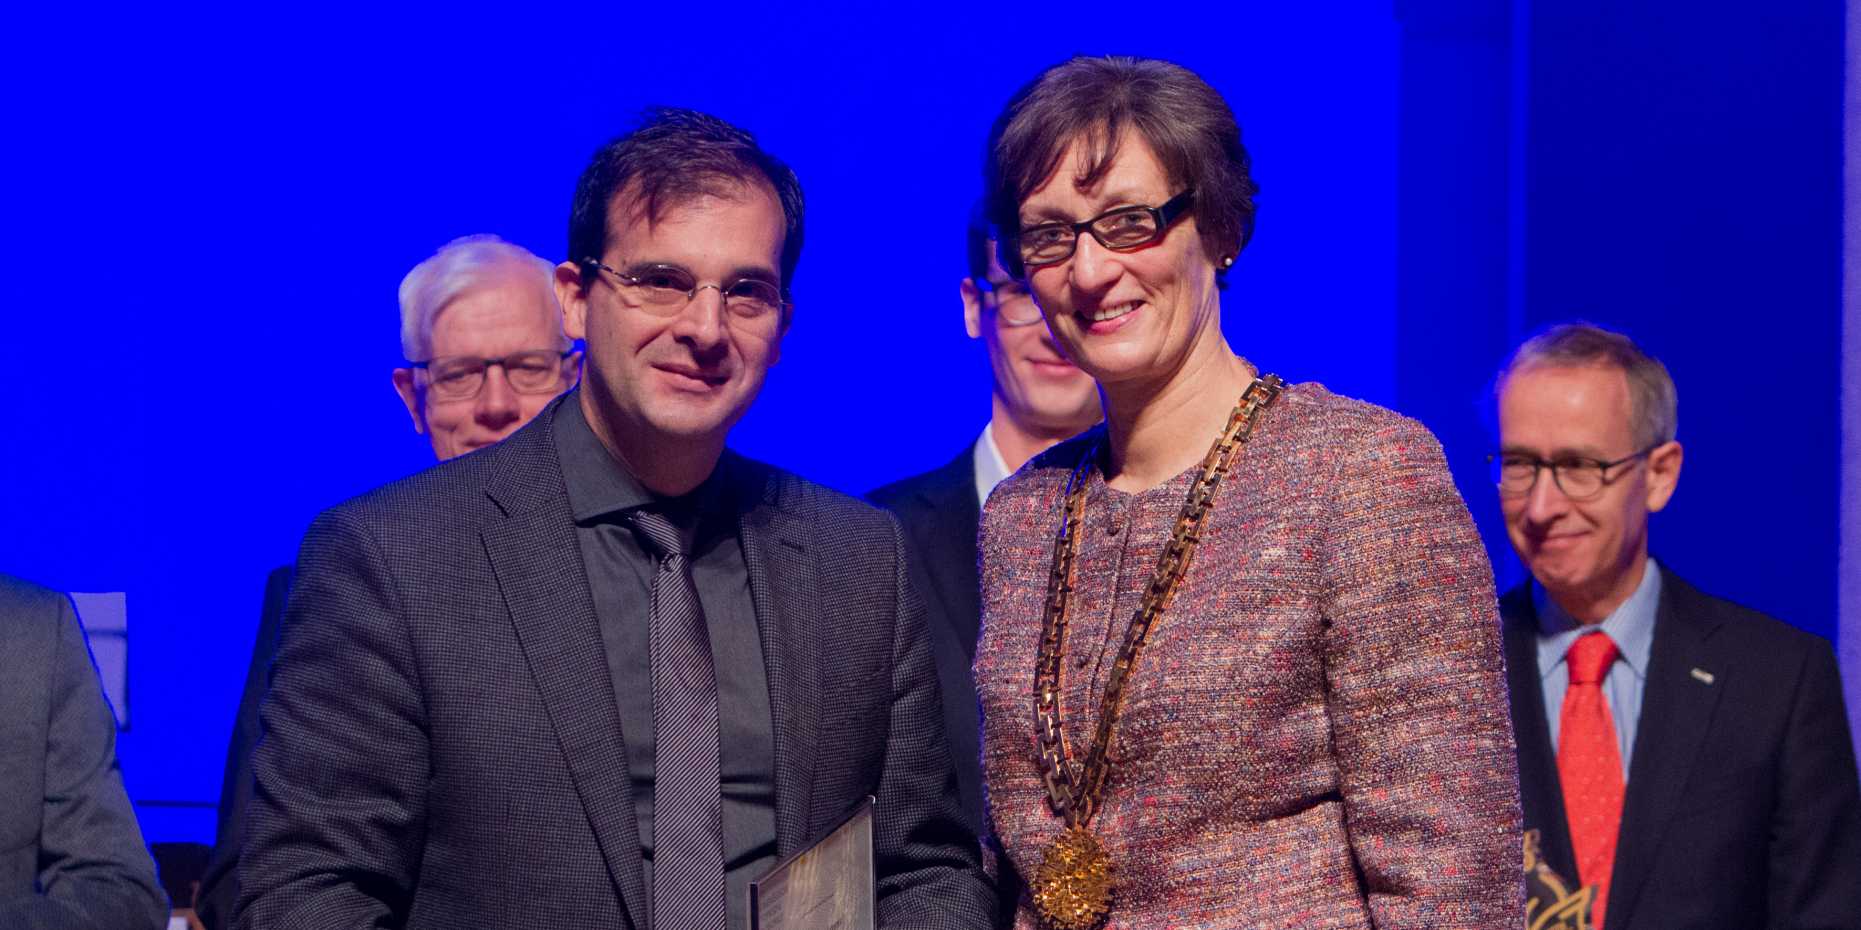 Prof. John Lygeros receiving the Credit Suisse Award from Rector Sarah Springman